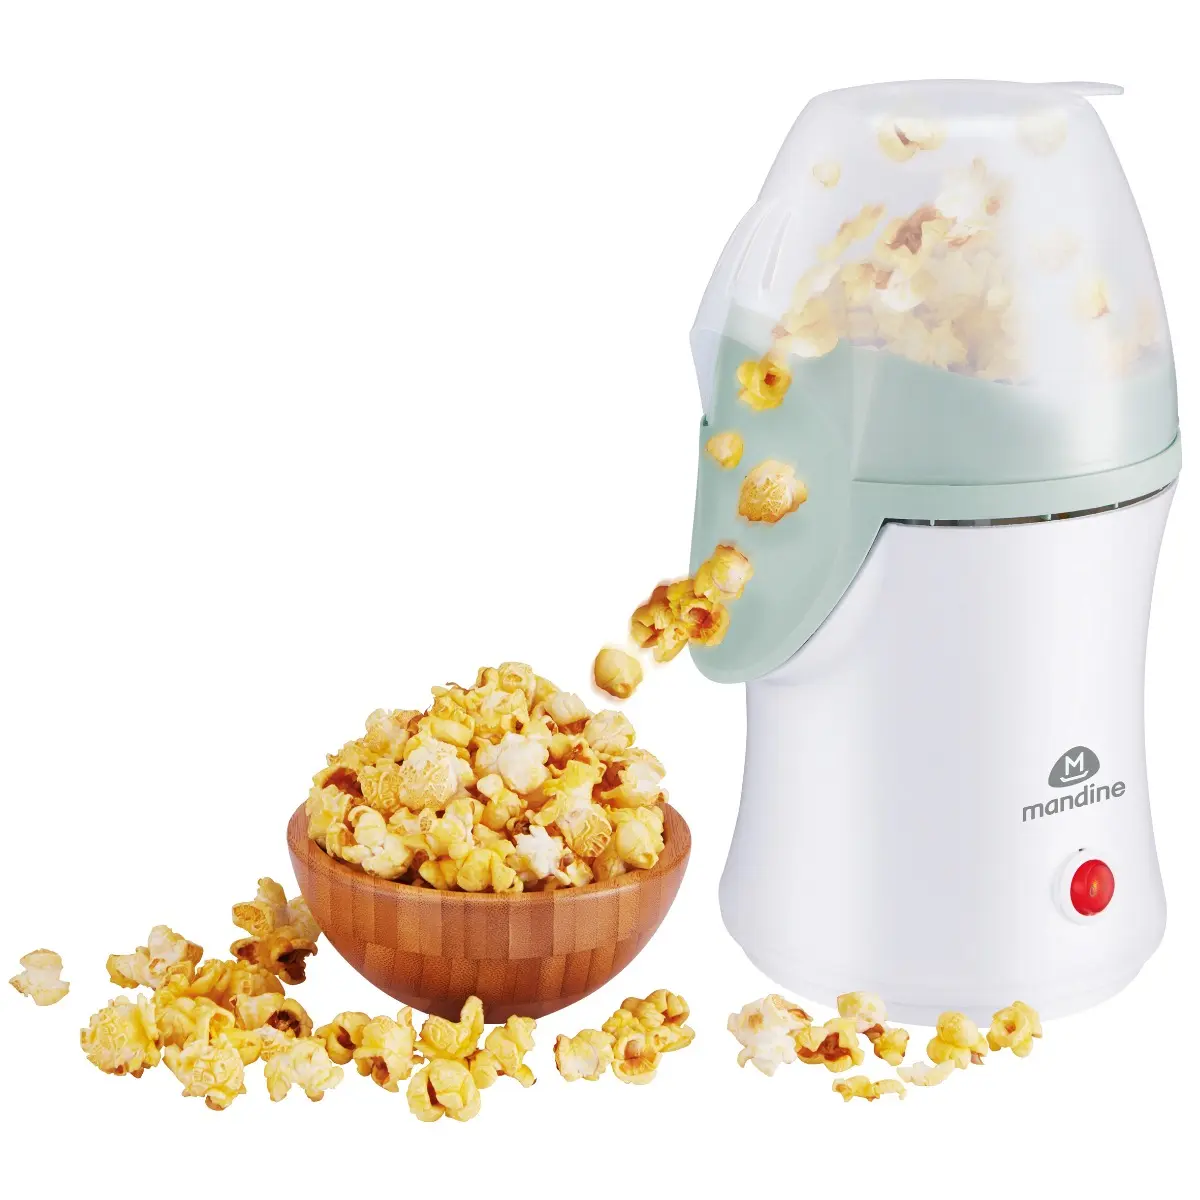 Masina de facut popcorn Mandine MPC100-18, 1300W, gata in 5 minute, Alb